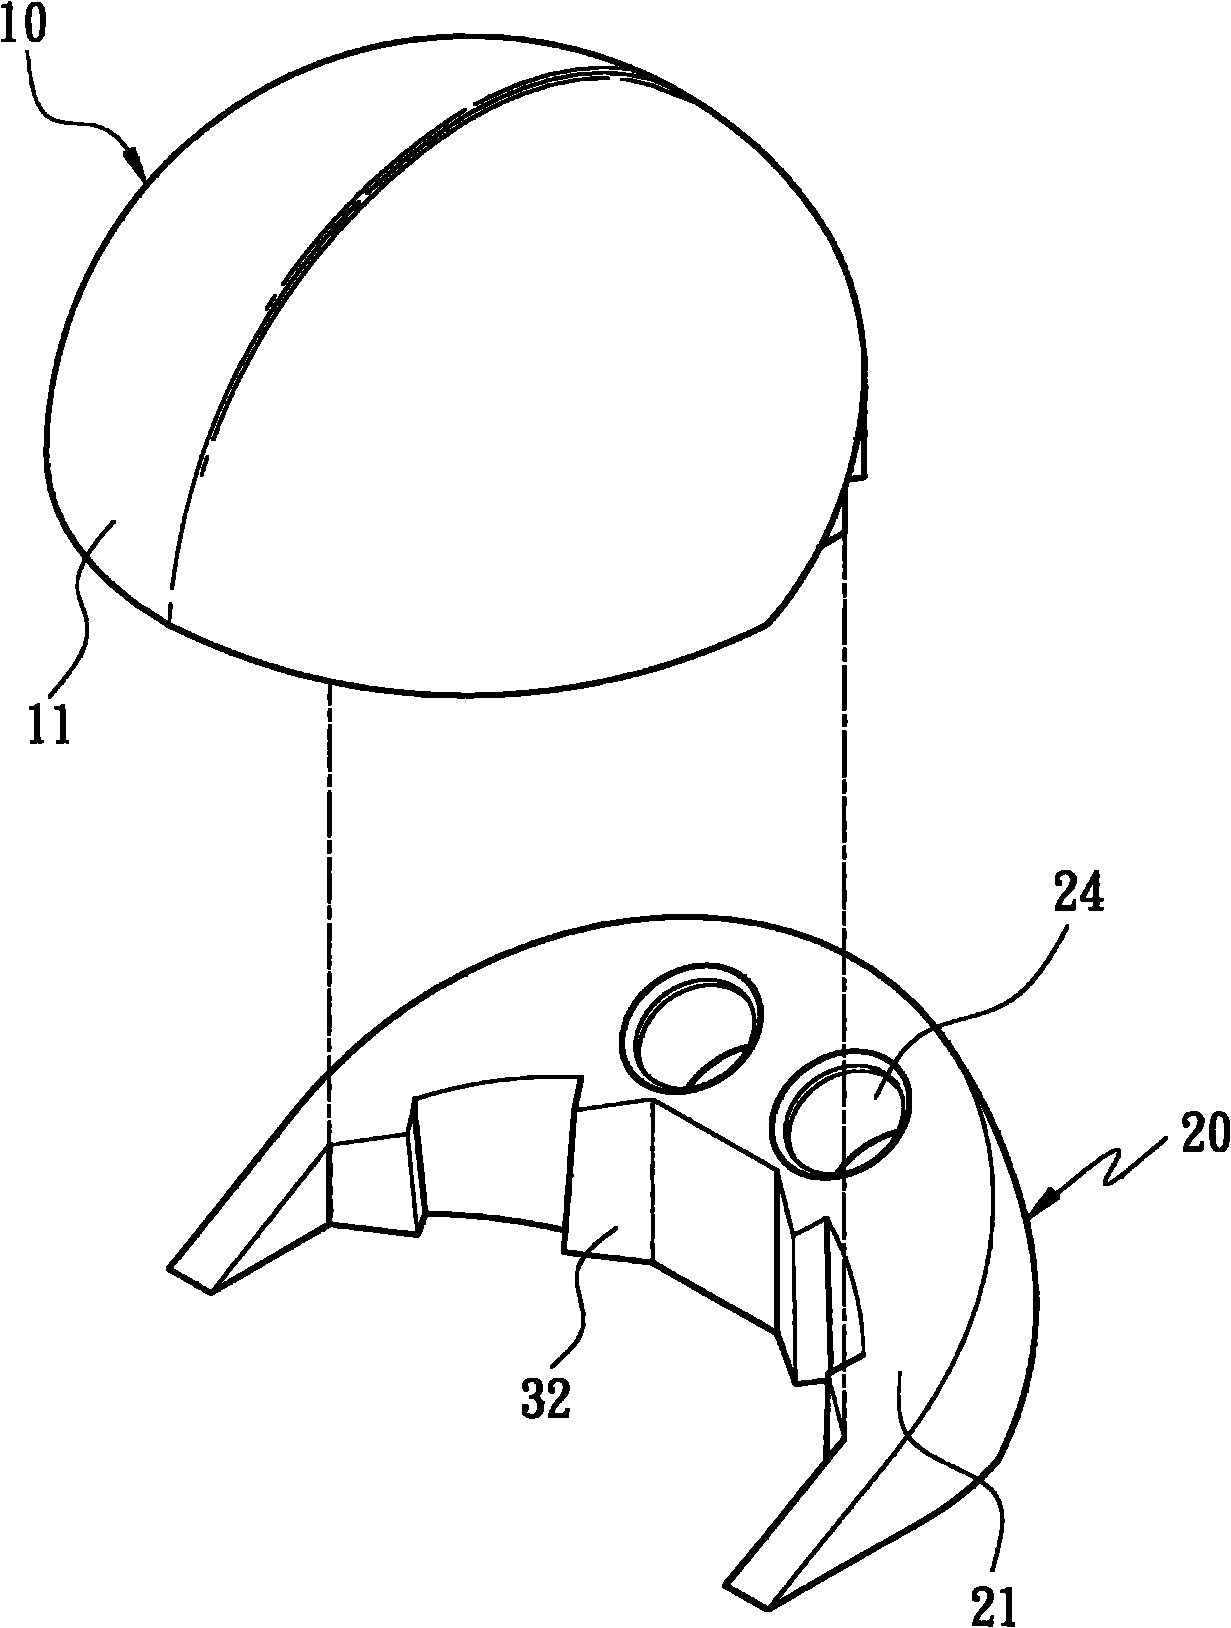 Modularized manual acetabulum cup